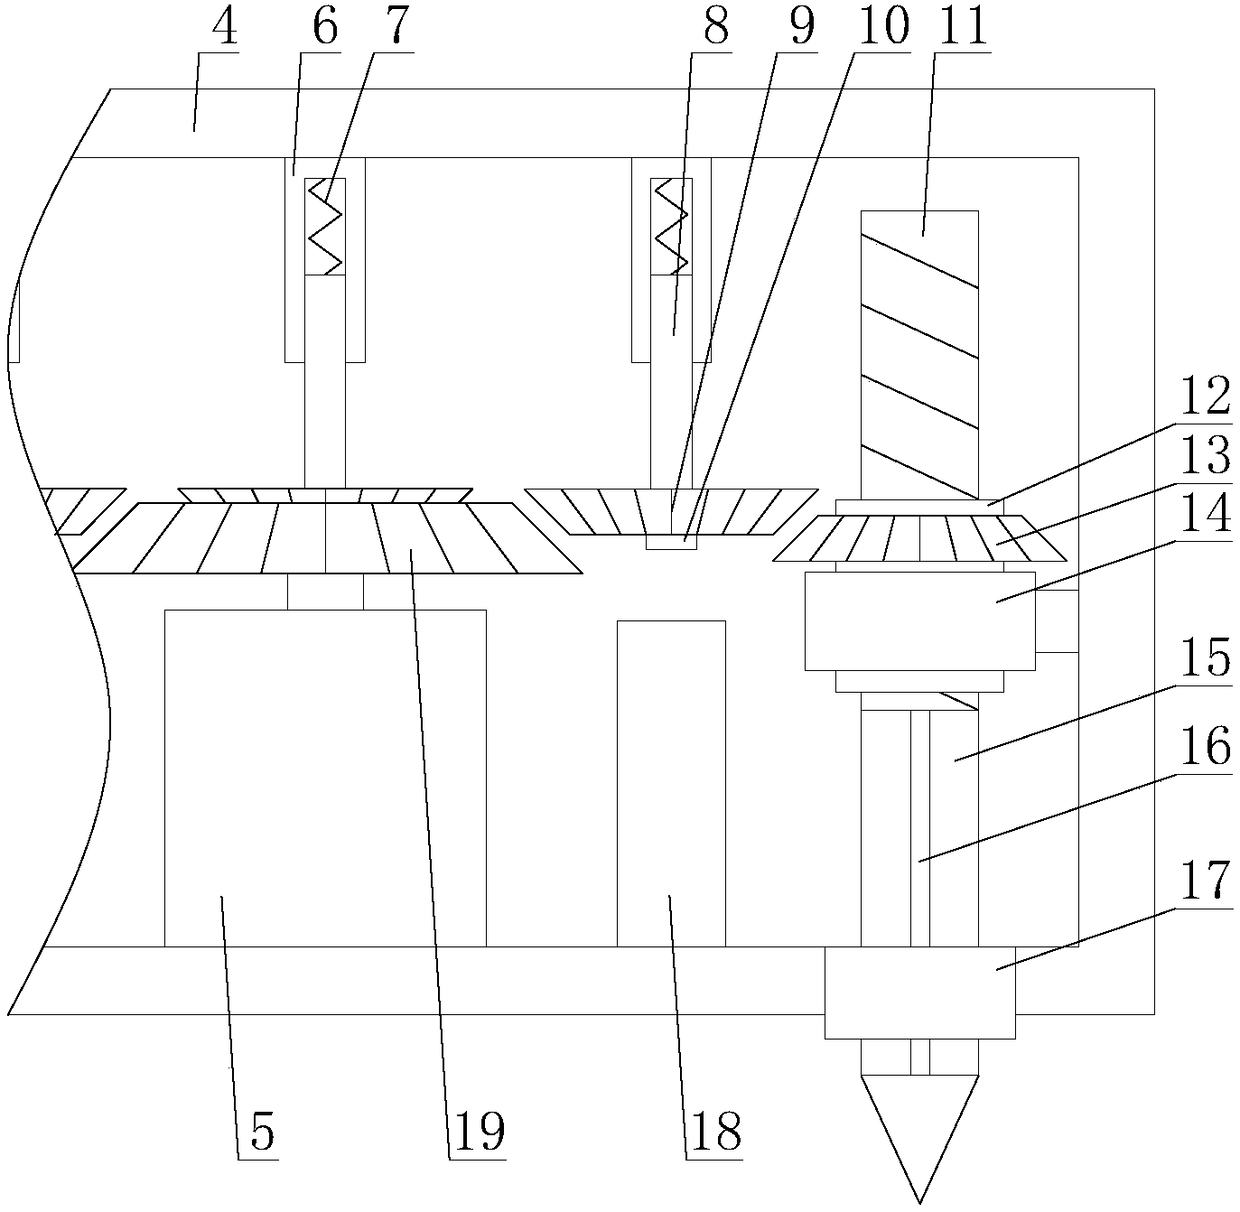 Laser level gauge with horizontal correcting function